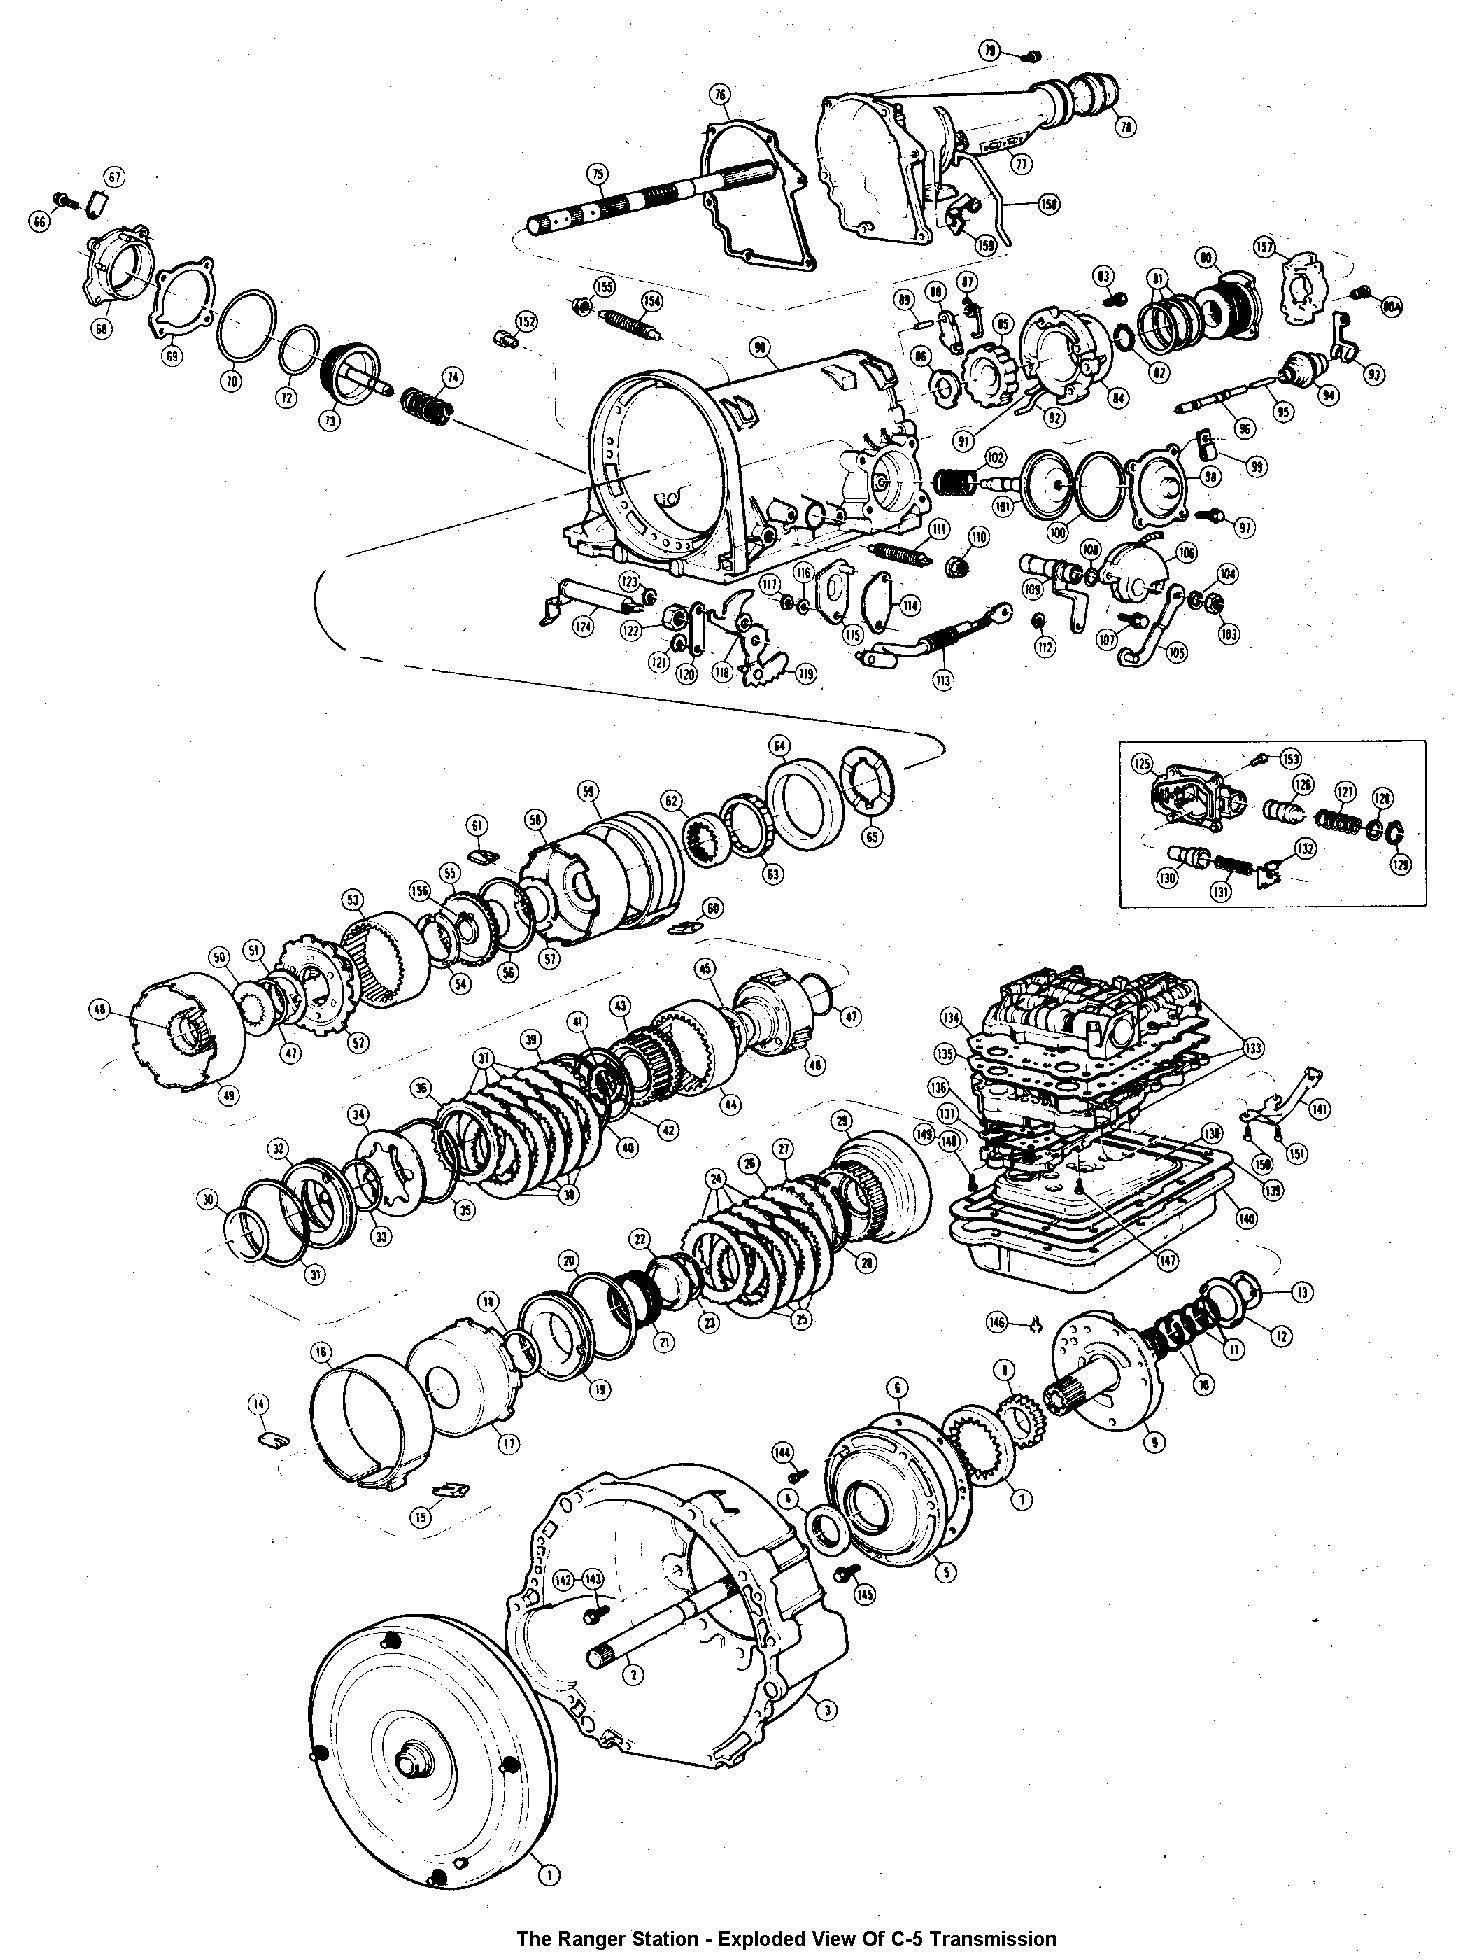 Ford 4 0 sohc Engine Diagram 2 ford Ranger Automatic Transmission Identification Of Ford 4 0 sohc Engine Diagram 2